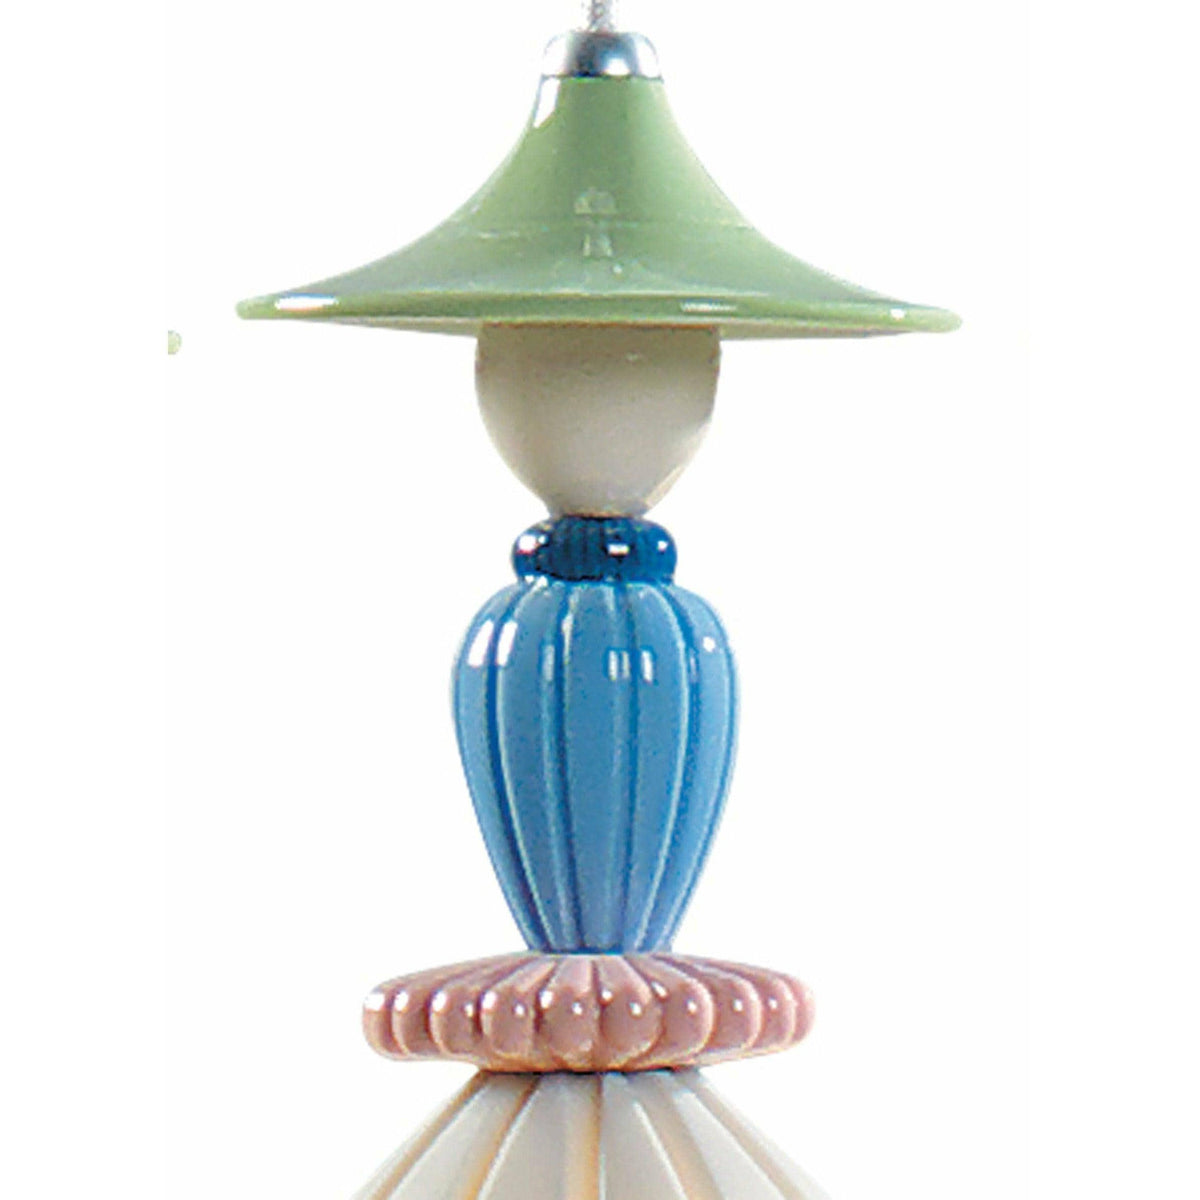 Lladro - Mademoiselle Round Canopy 3 Lights Sharing Secrets Ceiling Lamp - 01023552 | Montreal Lighting & Hardware